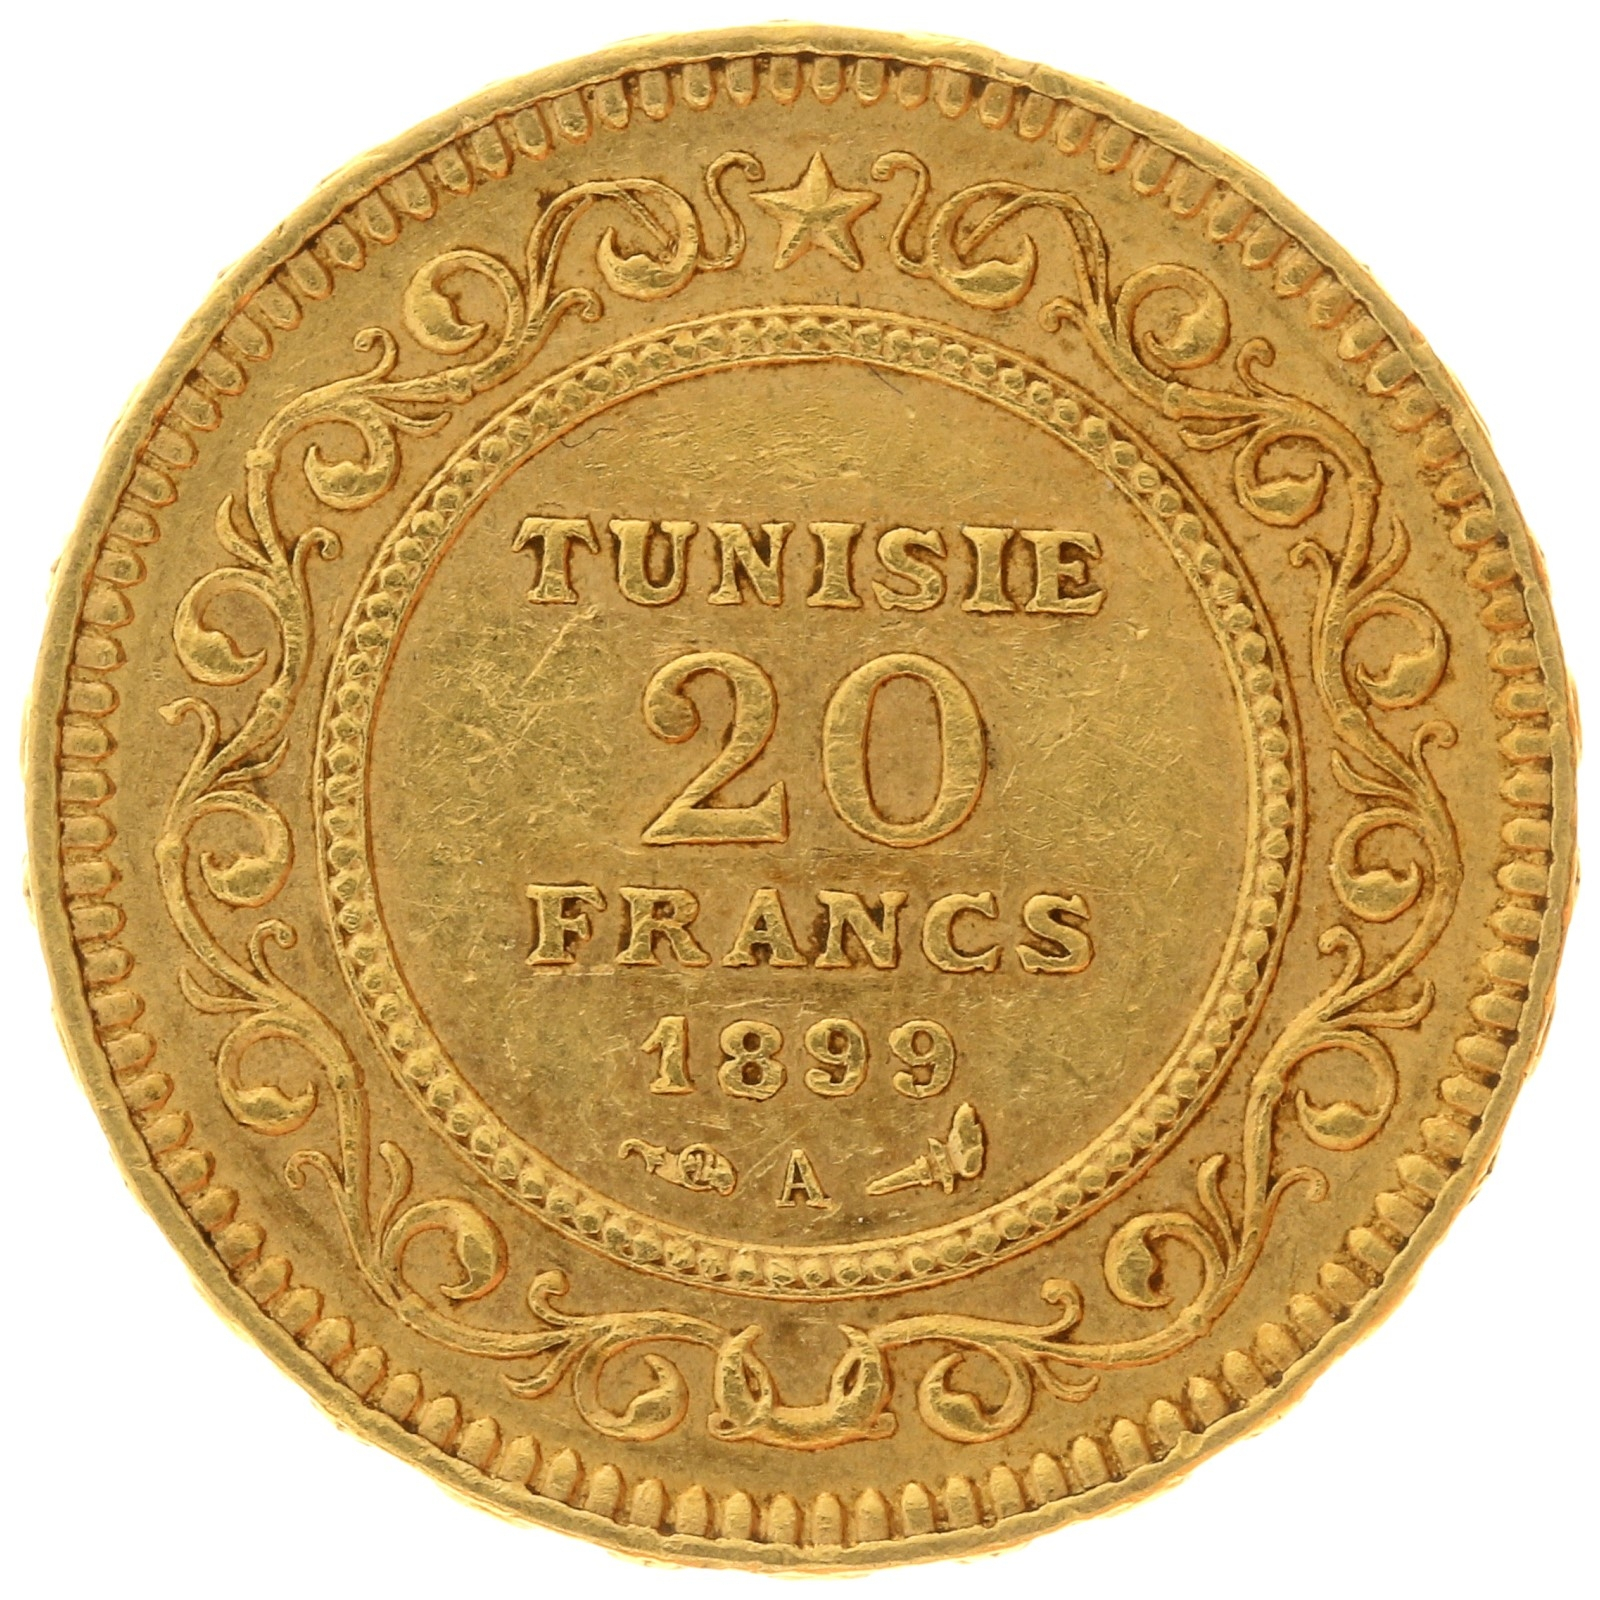 Tunisia - 20 francs - 1899 - A - Ali Bey